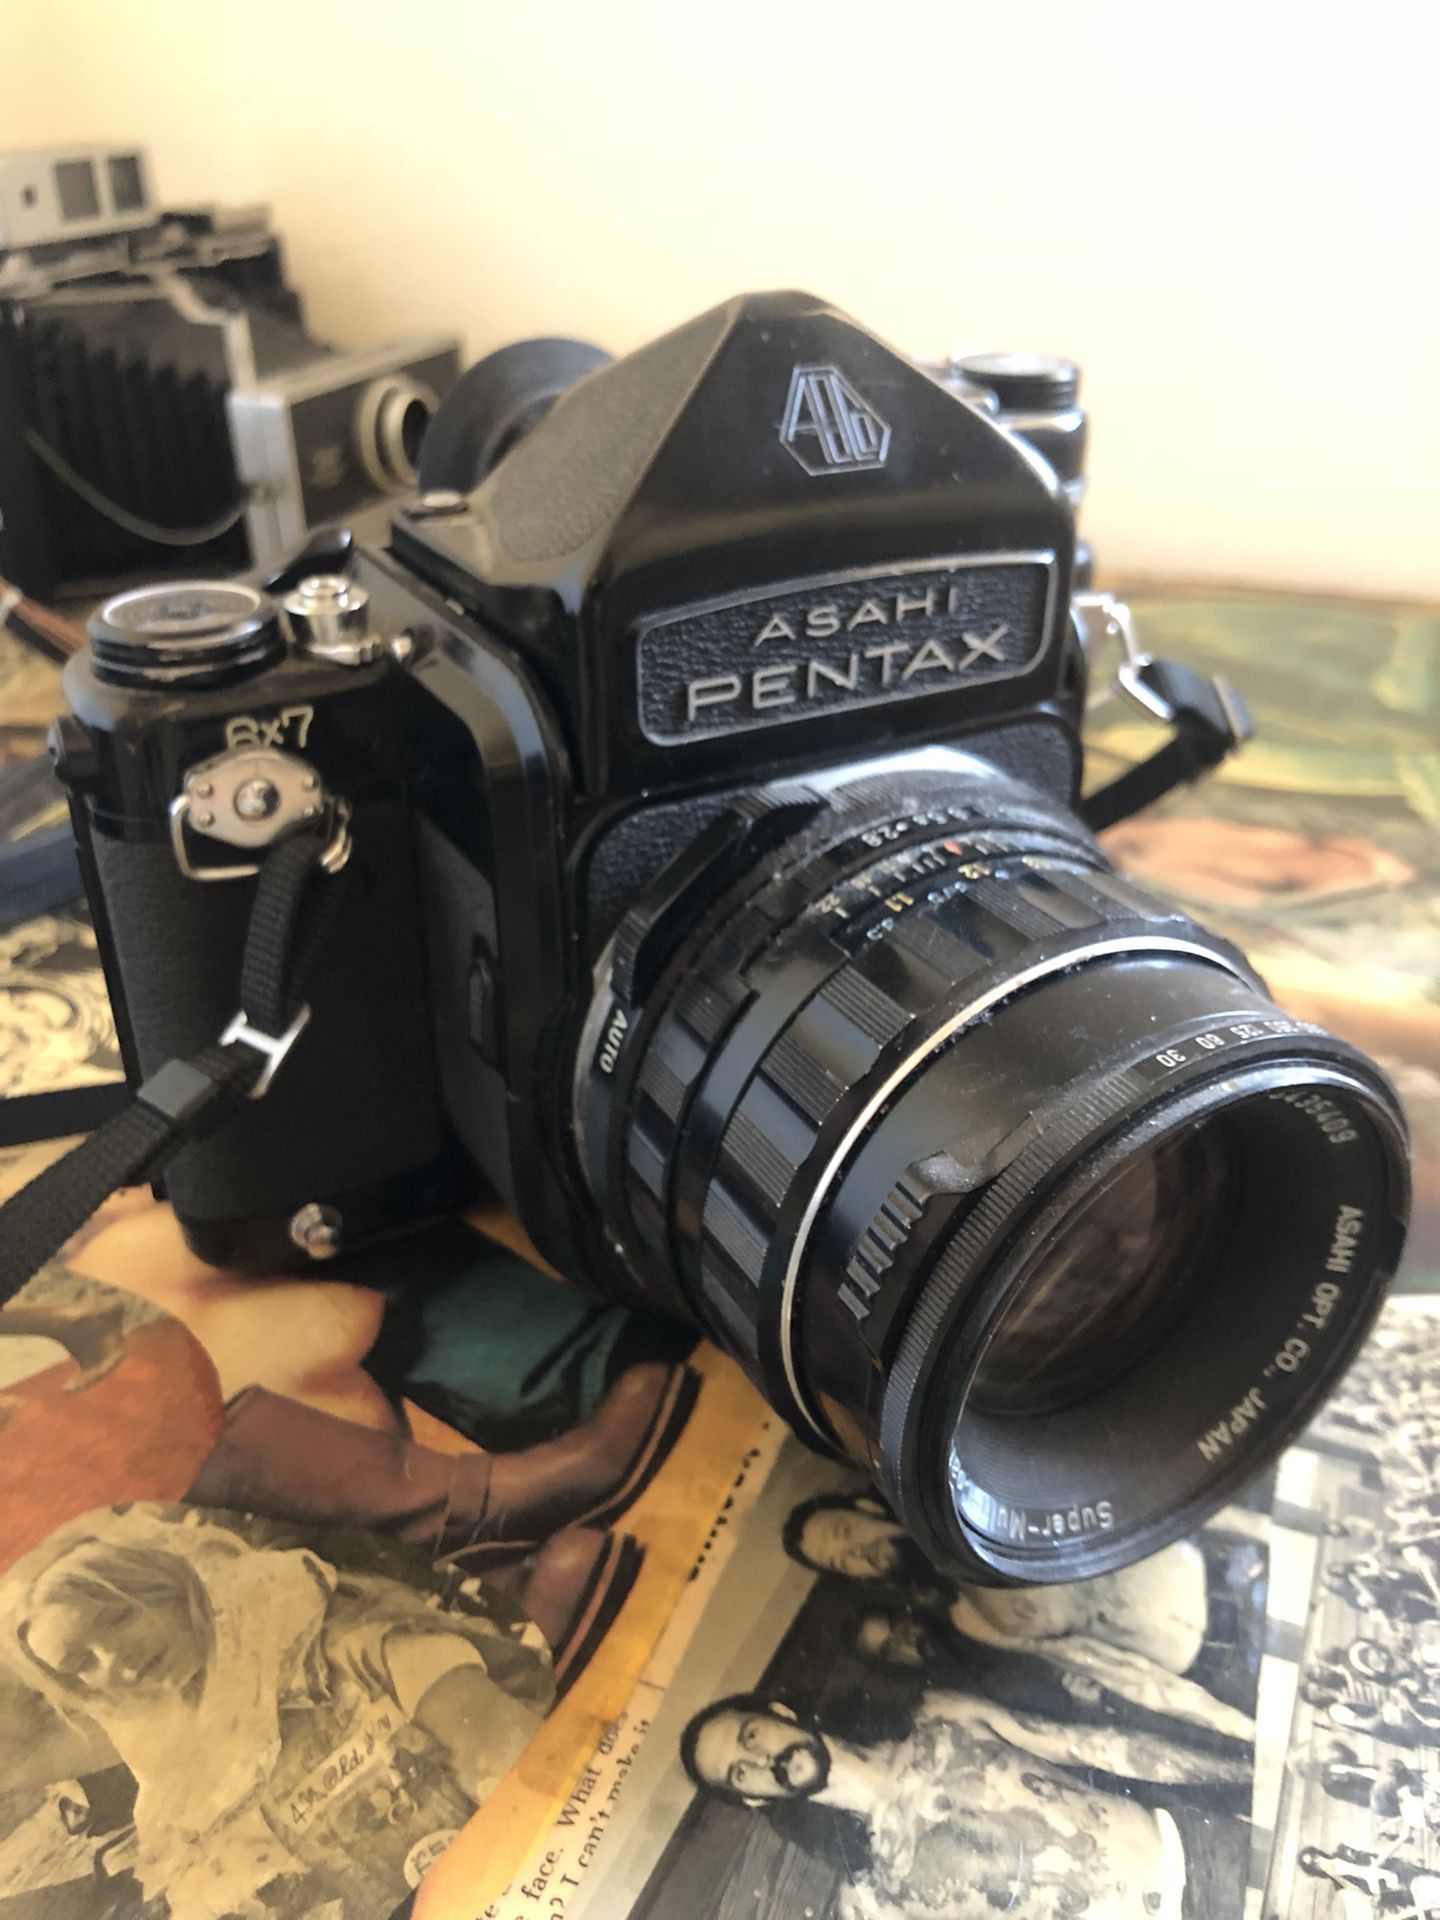 Pentax 6x7 Film camera